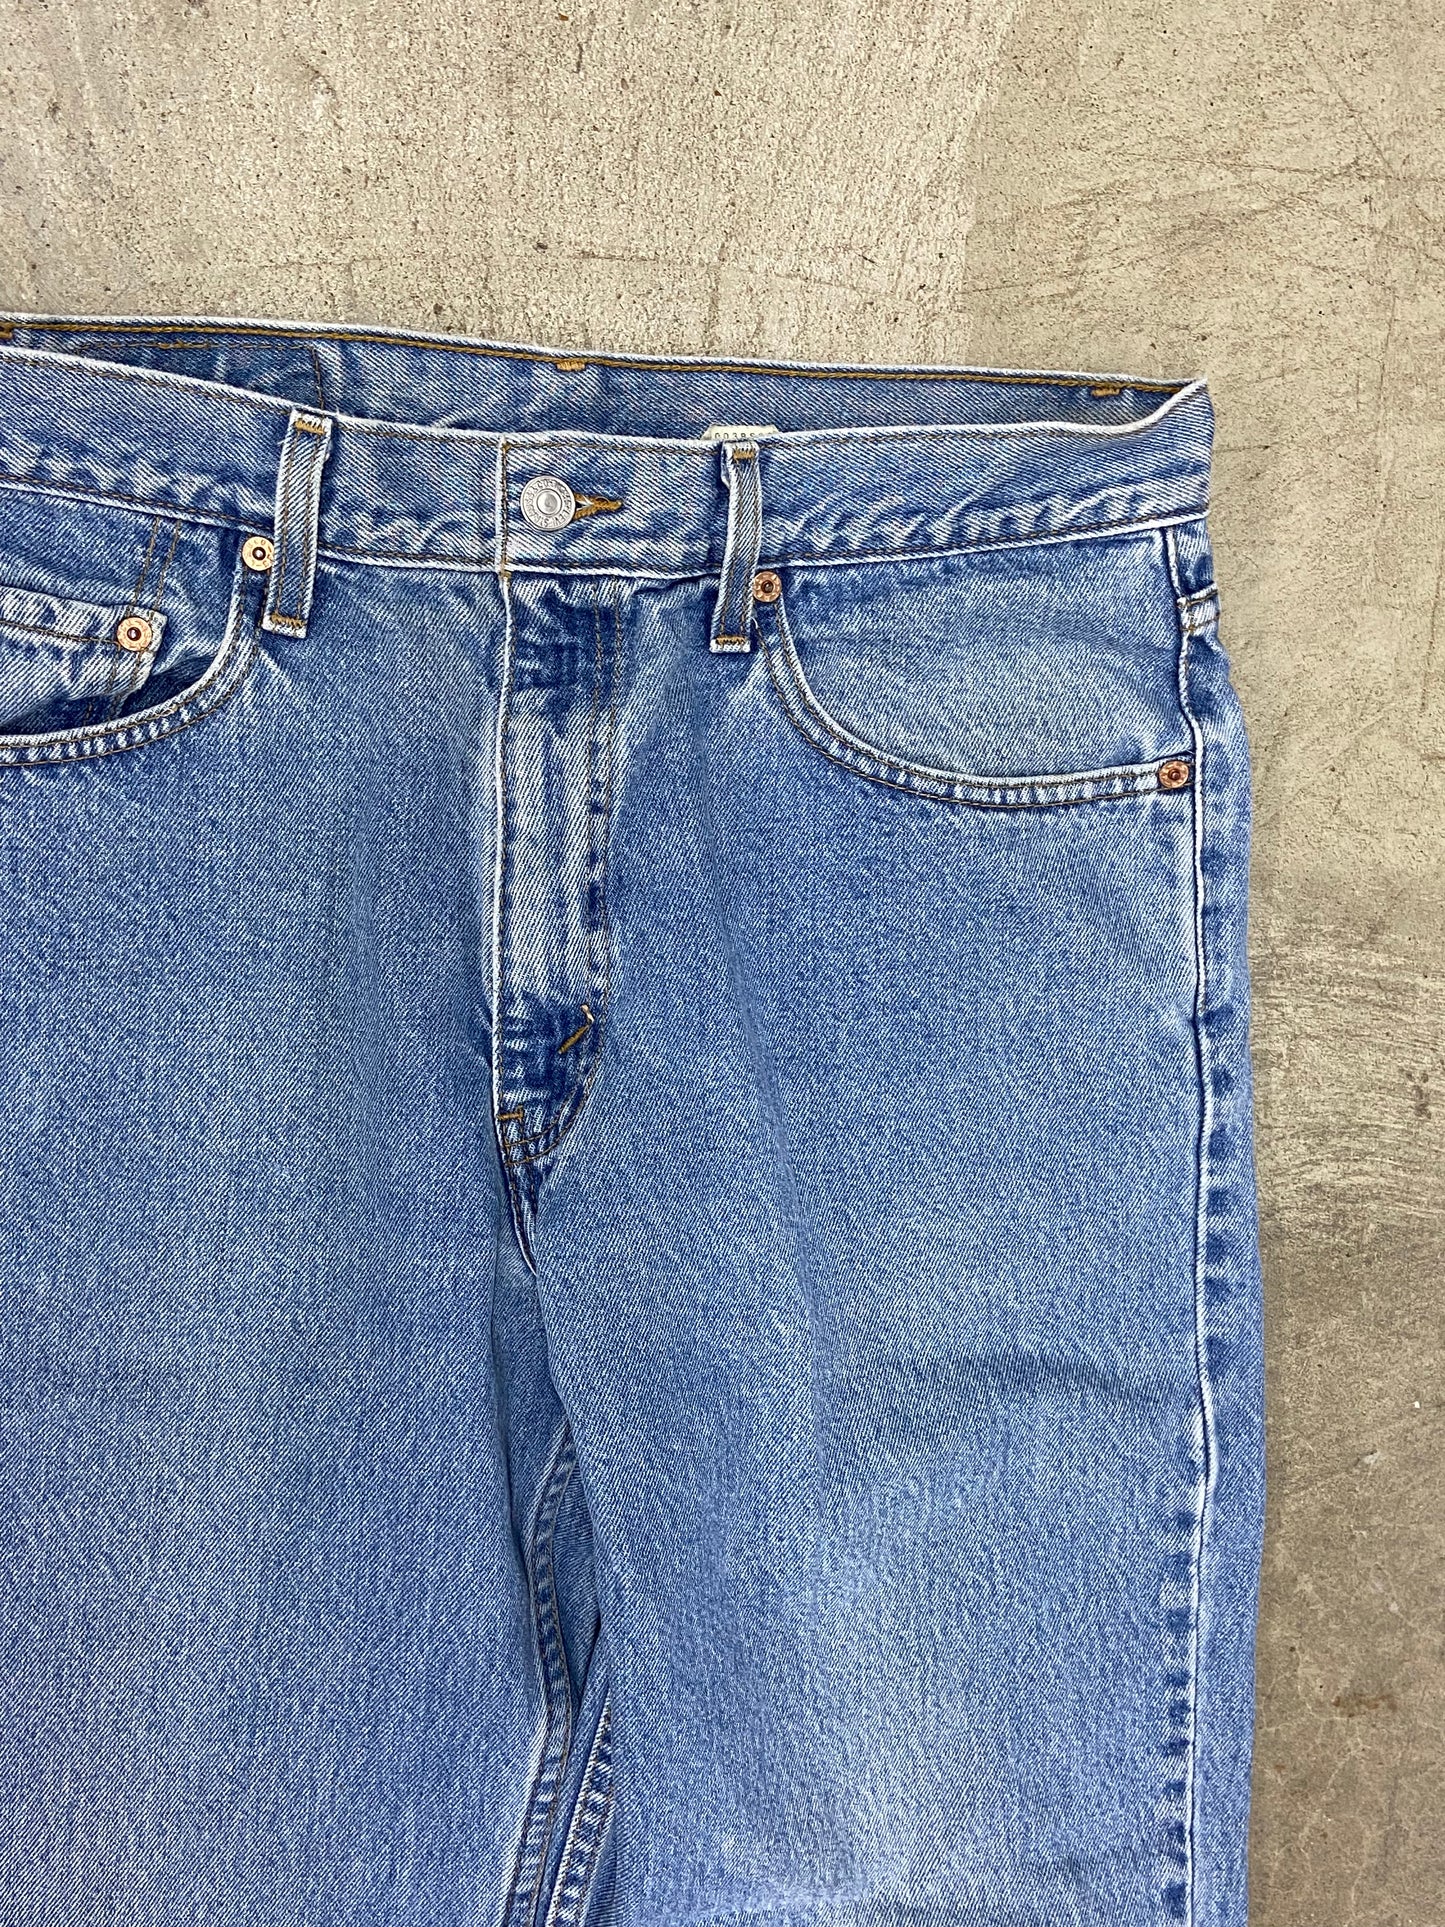 VTG Levi's 550 Blue Light Wash Denim Jeans Sz 33x31